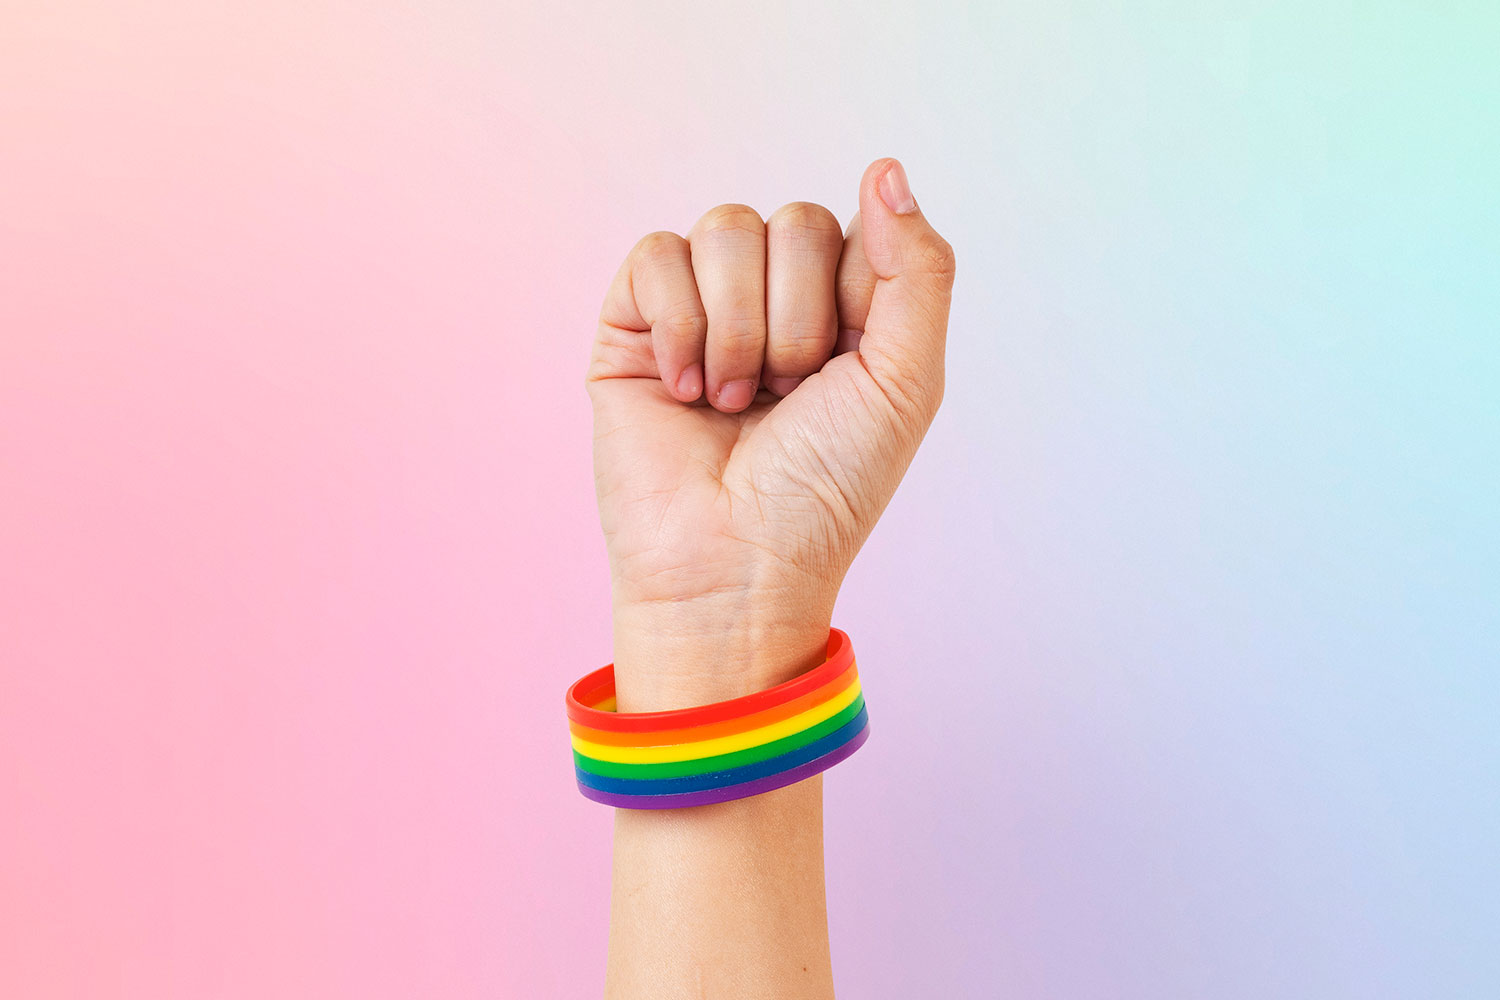 fist raised in air with rainbow bracelet